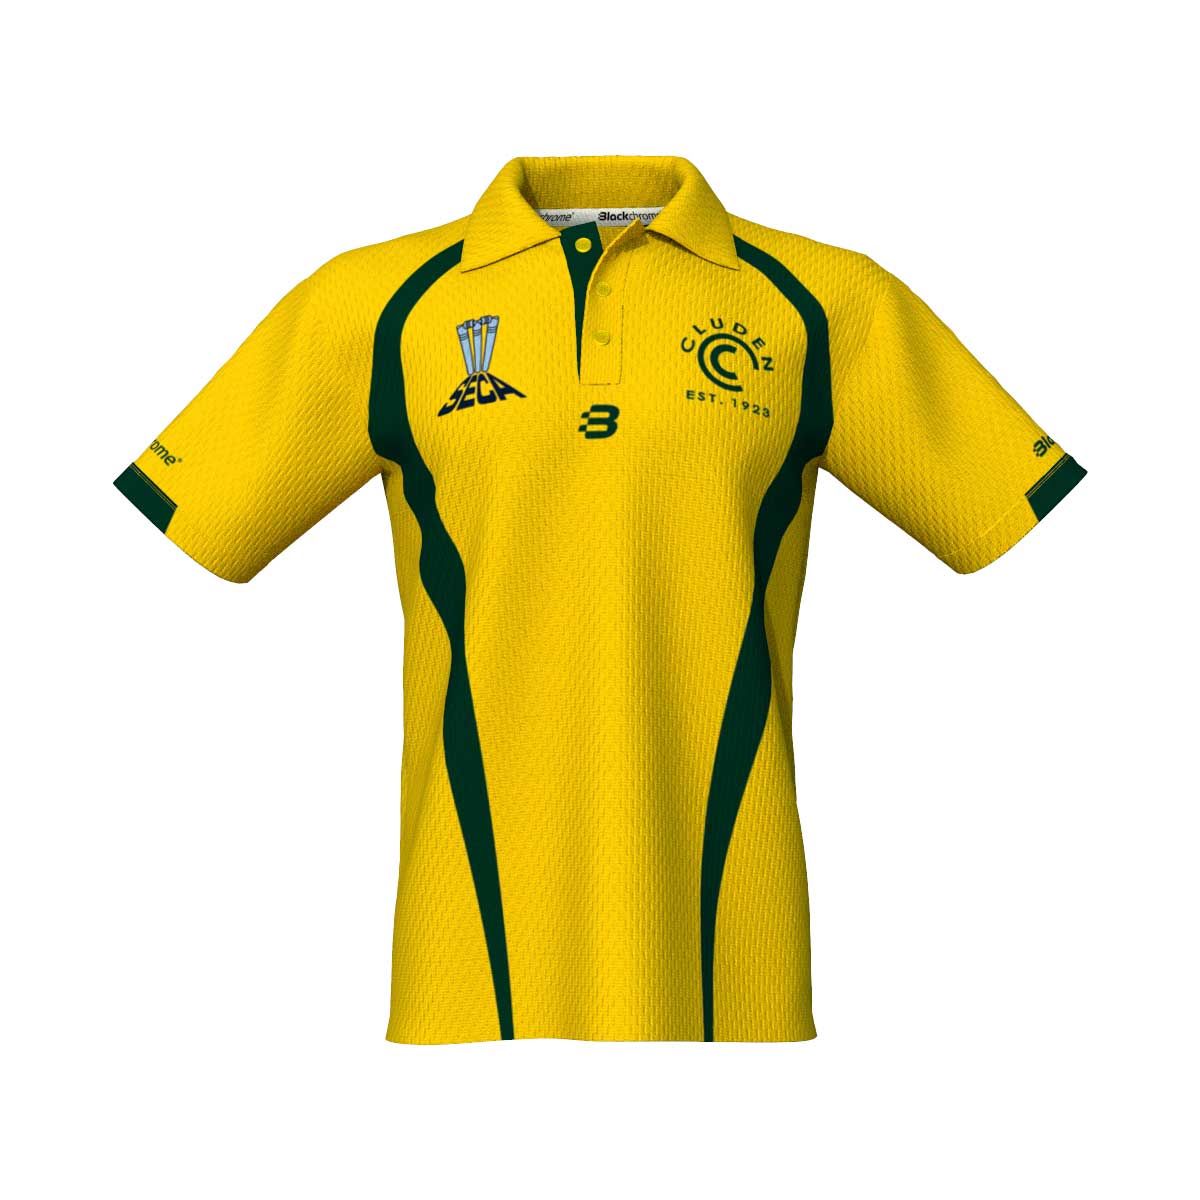 Cricket Shirt Custom Design escapeauthority